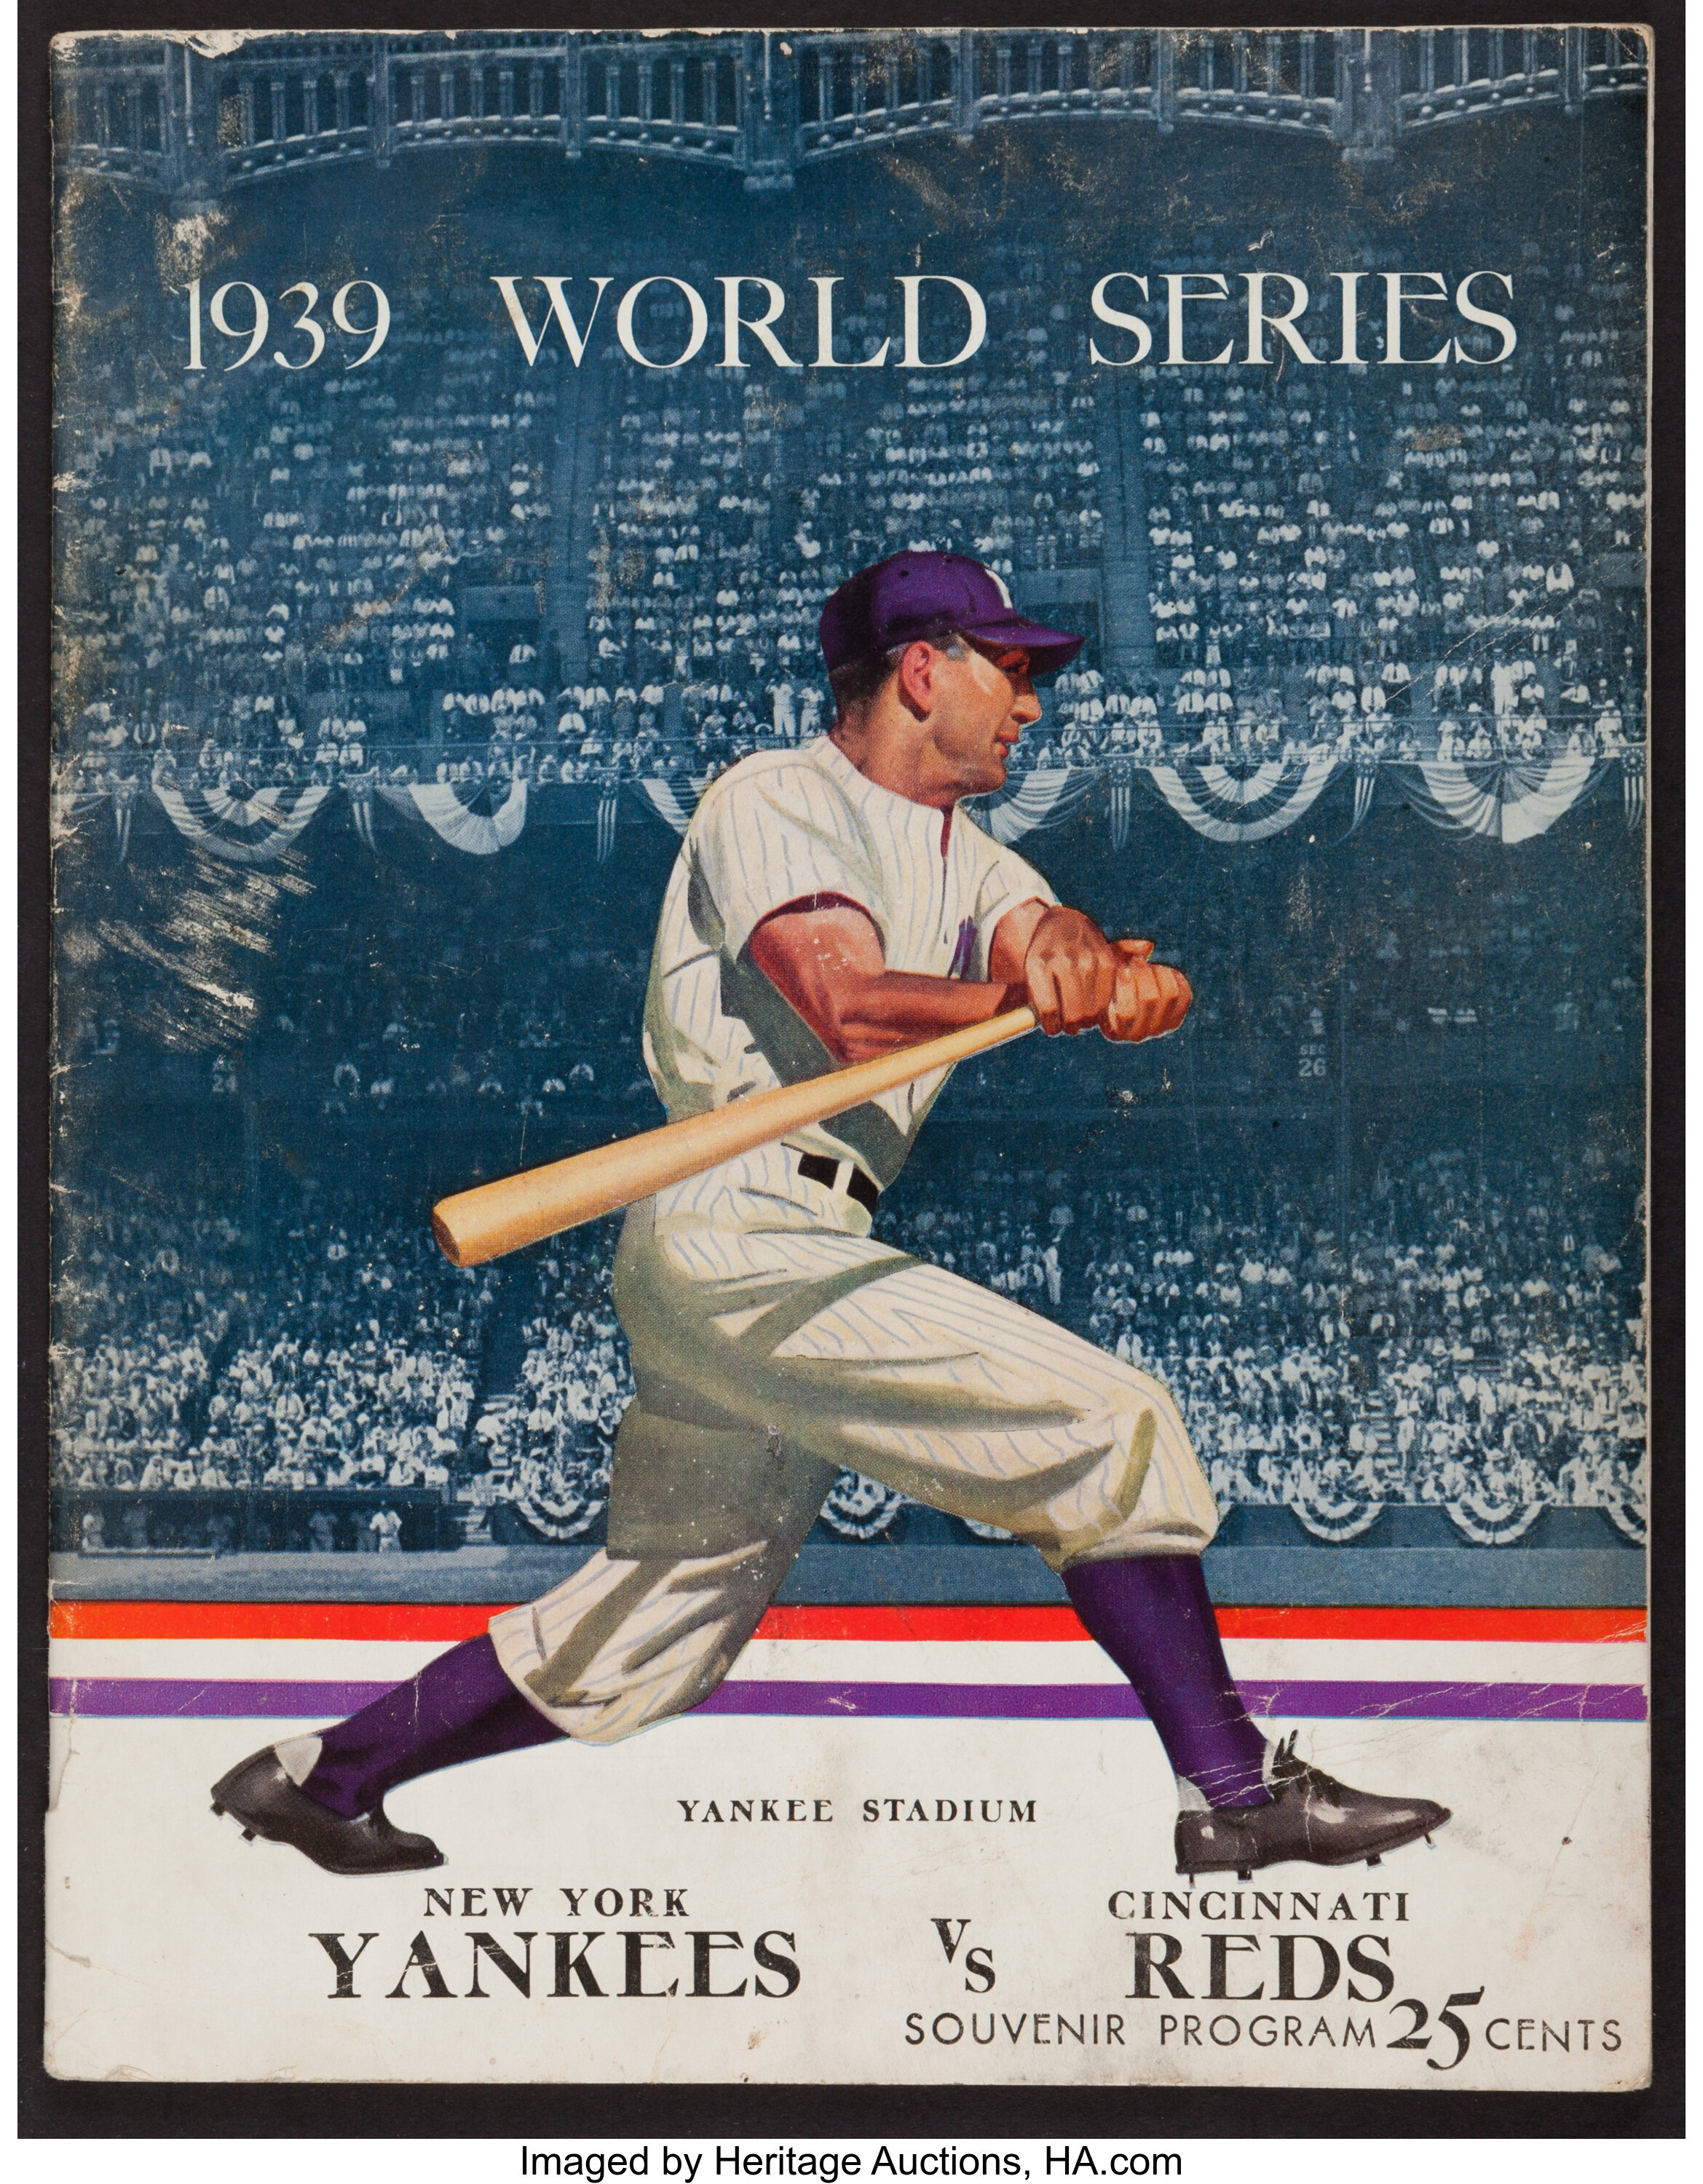 1939 New York Yankees Vs Cincinnati Reds World Series Program New Lot 42143 Heritage Auctions